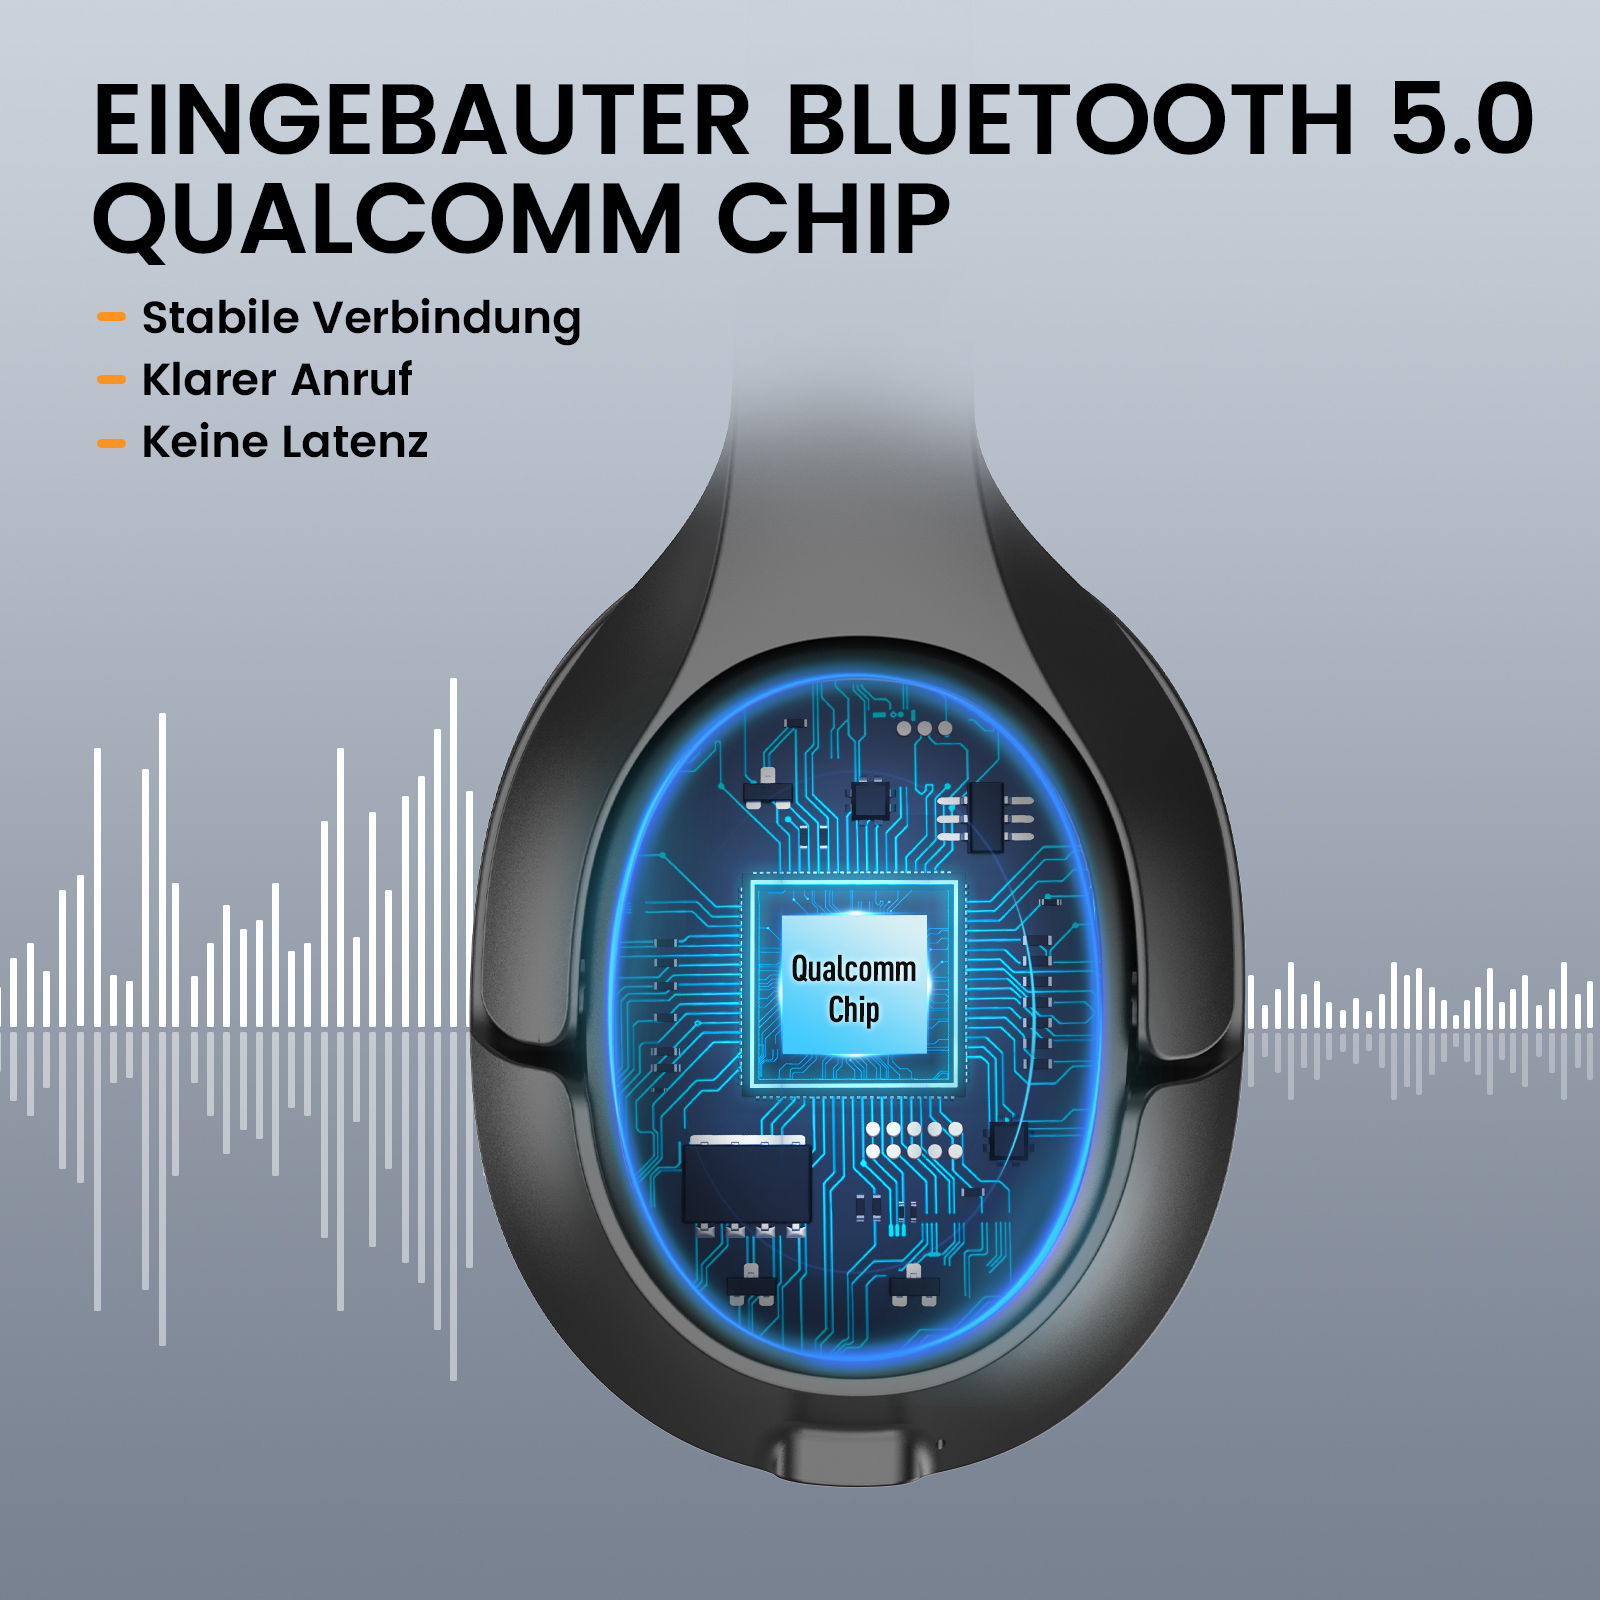 Over-ear Black Headset Bluetooth EKSA-TRADE Bluetooth H1,